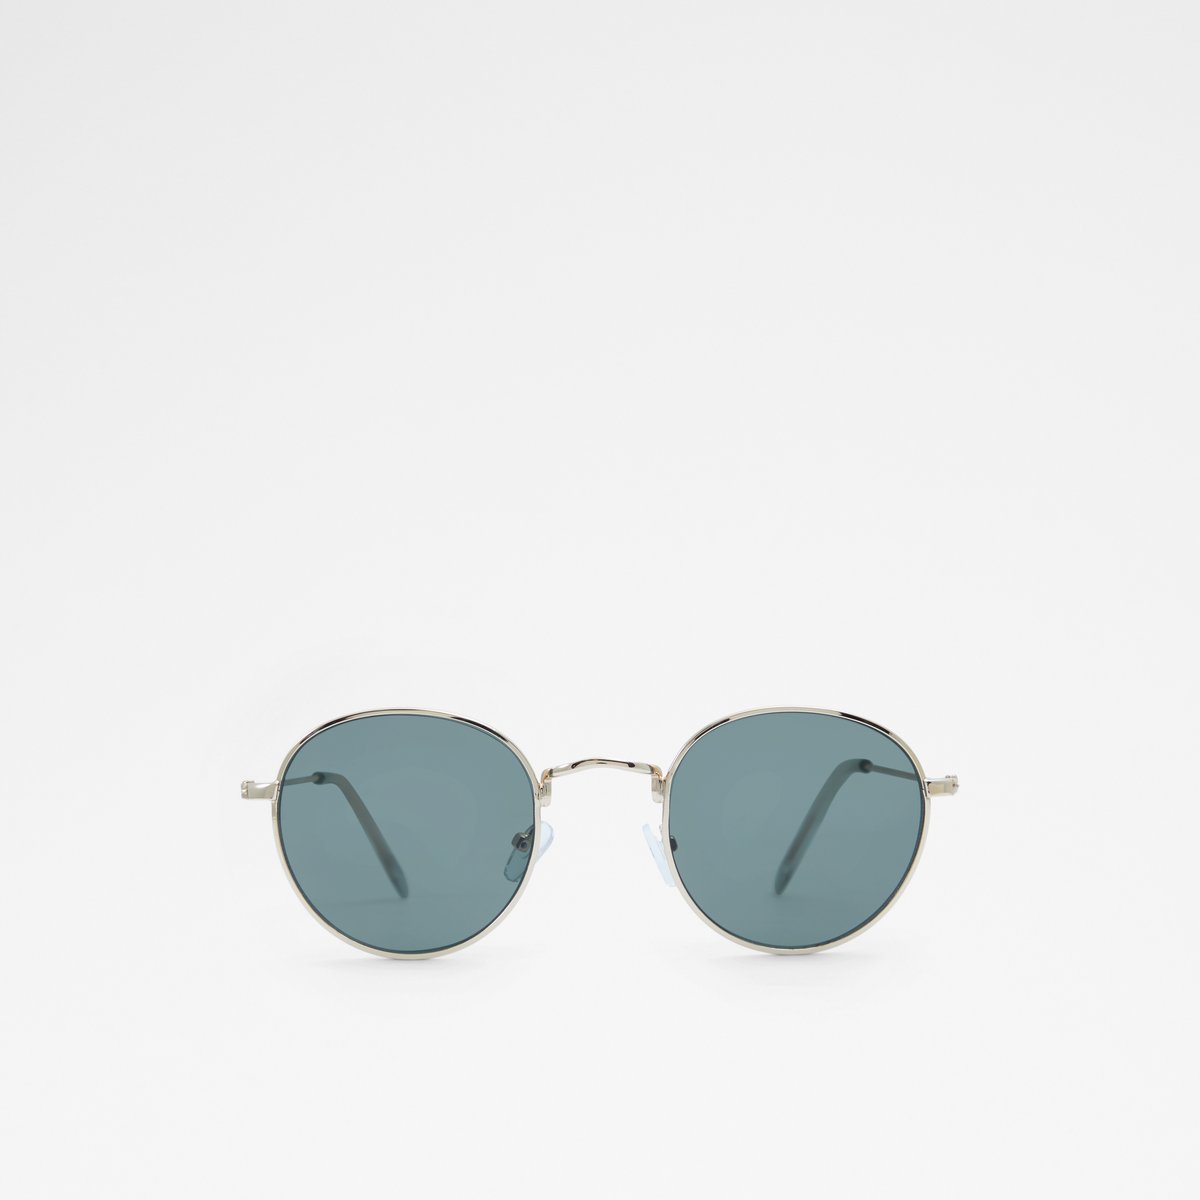 Kangaloon Round Sunglasses